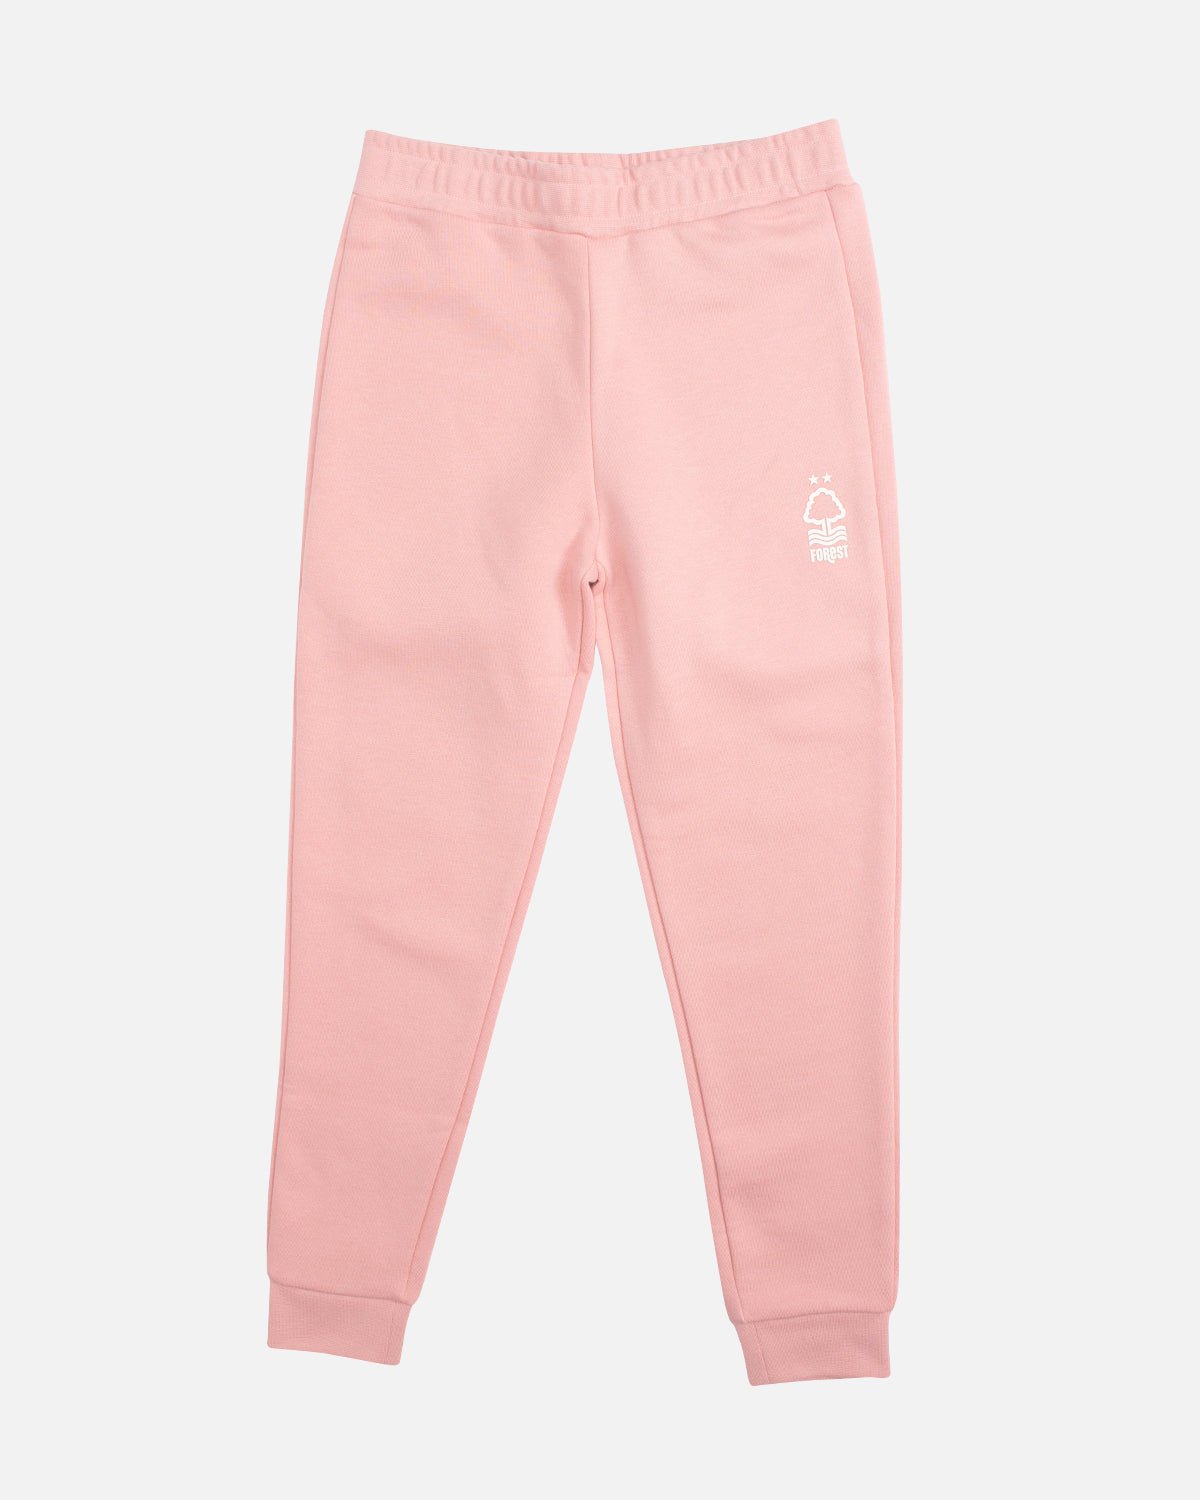 Peach jogger pants